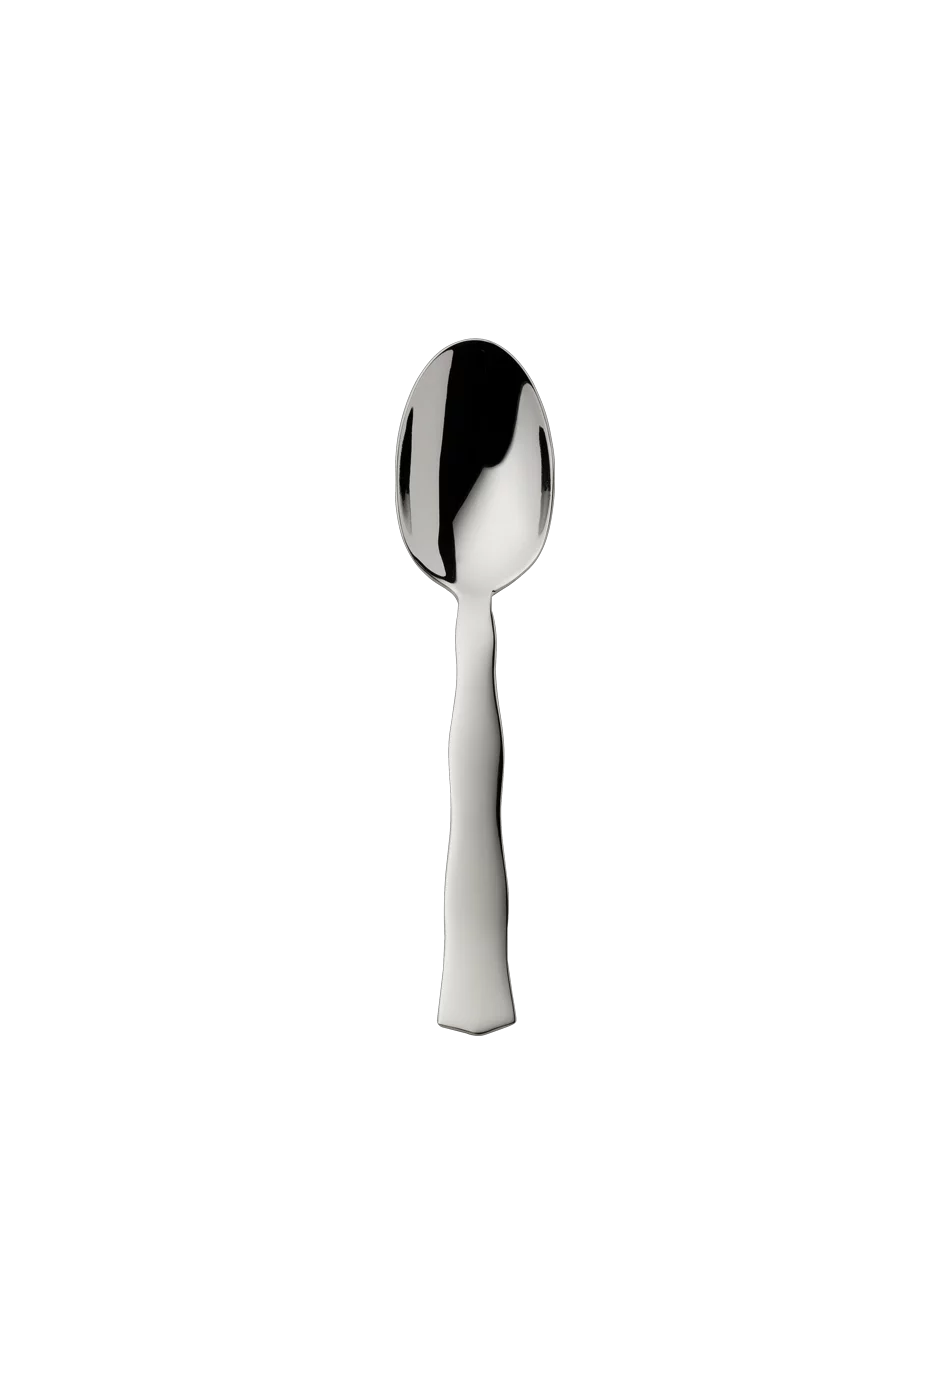 Lago Children's Spoon (18/8 stainless steel)